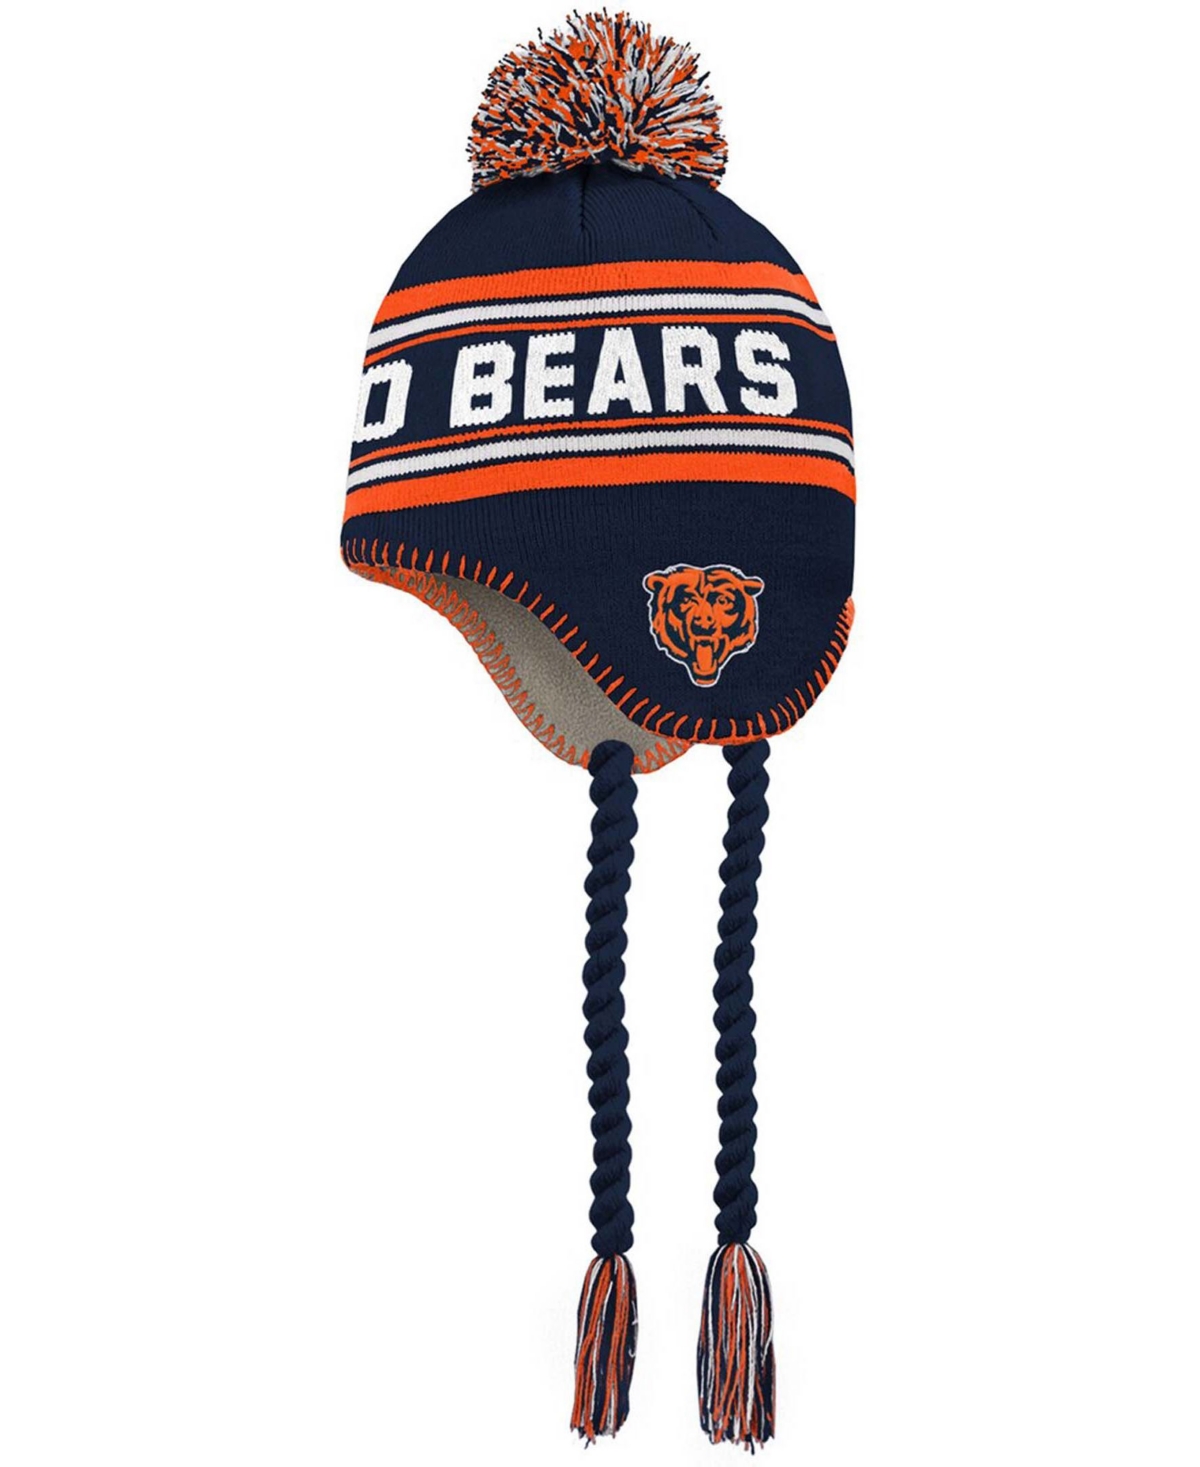 Outerstuff Kids' Big Boys And Girls Navy, Orange Chicago Bears Jacquard Tassel Knit Hat With Pom In Navy,orange